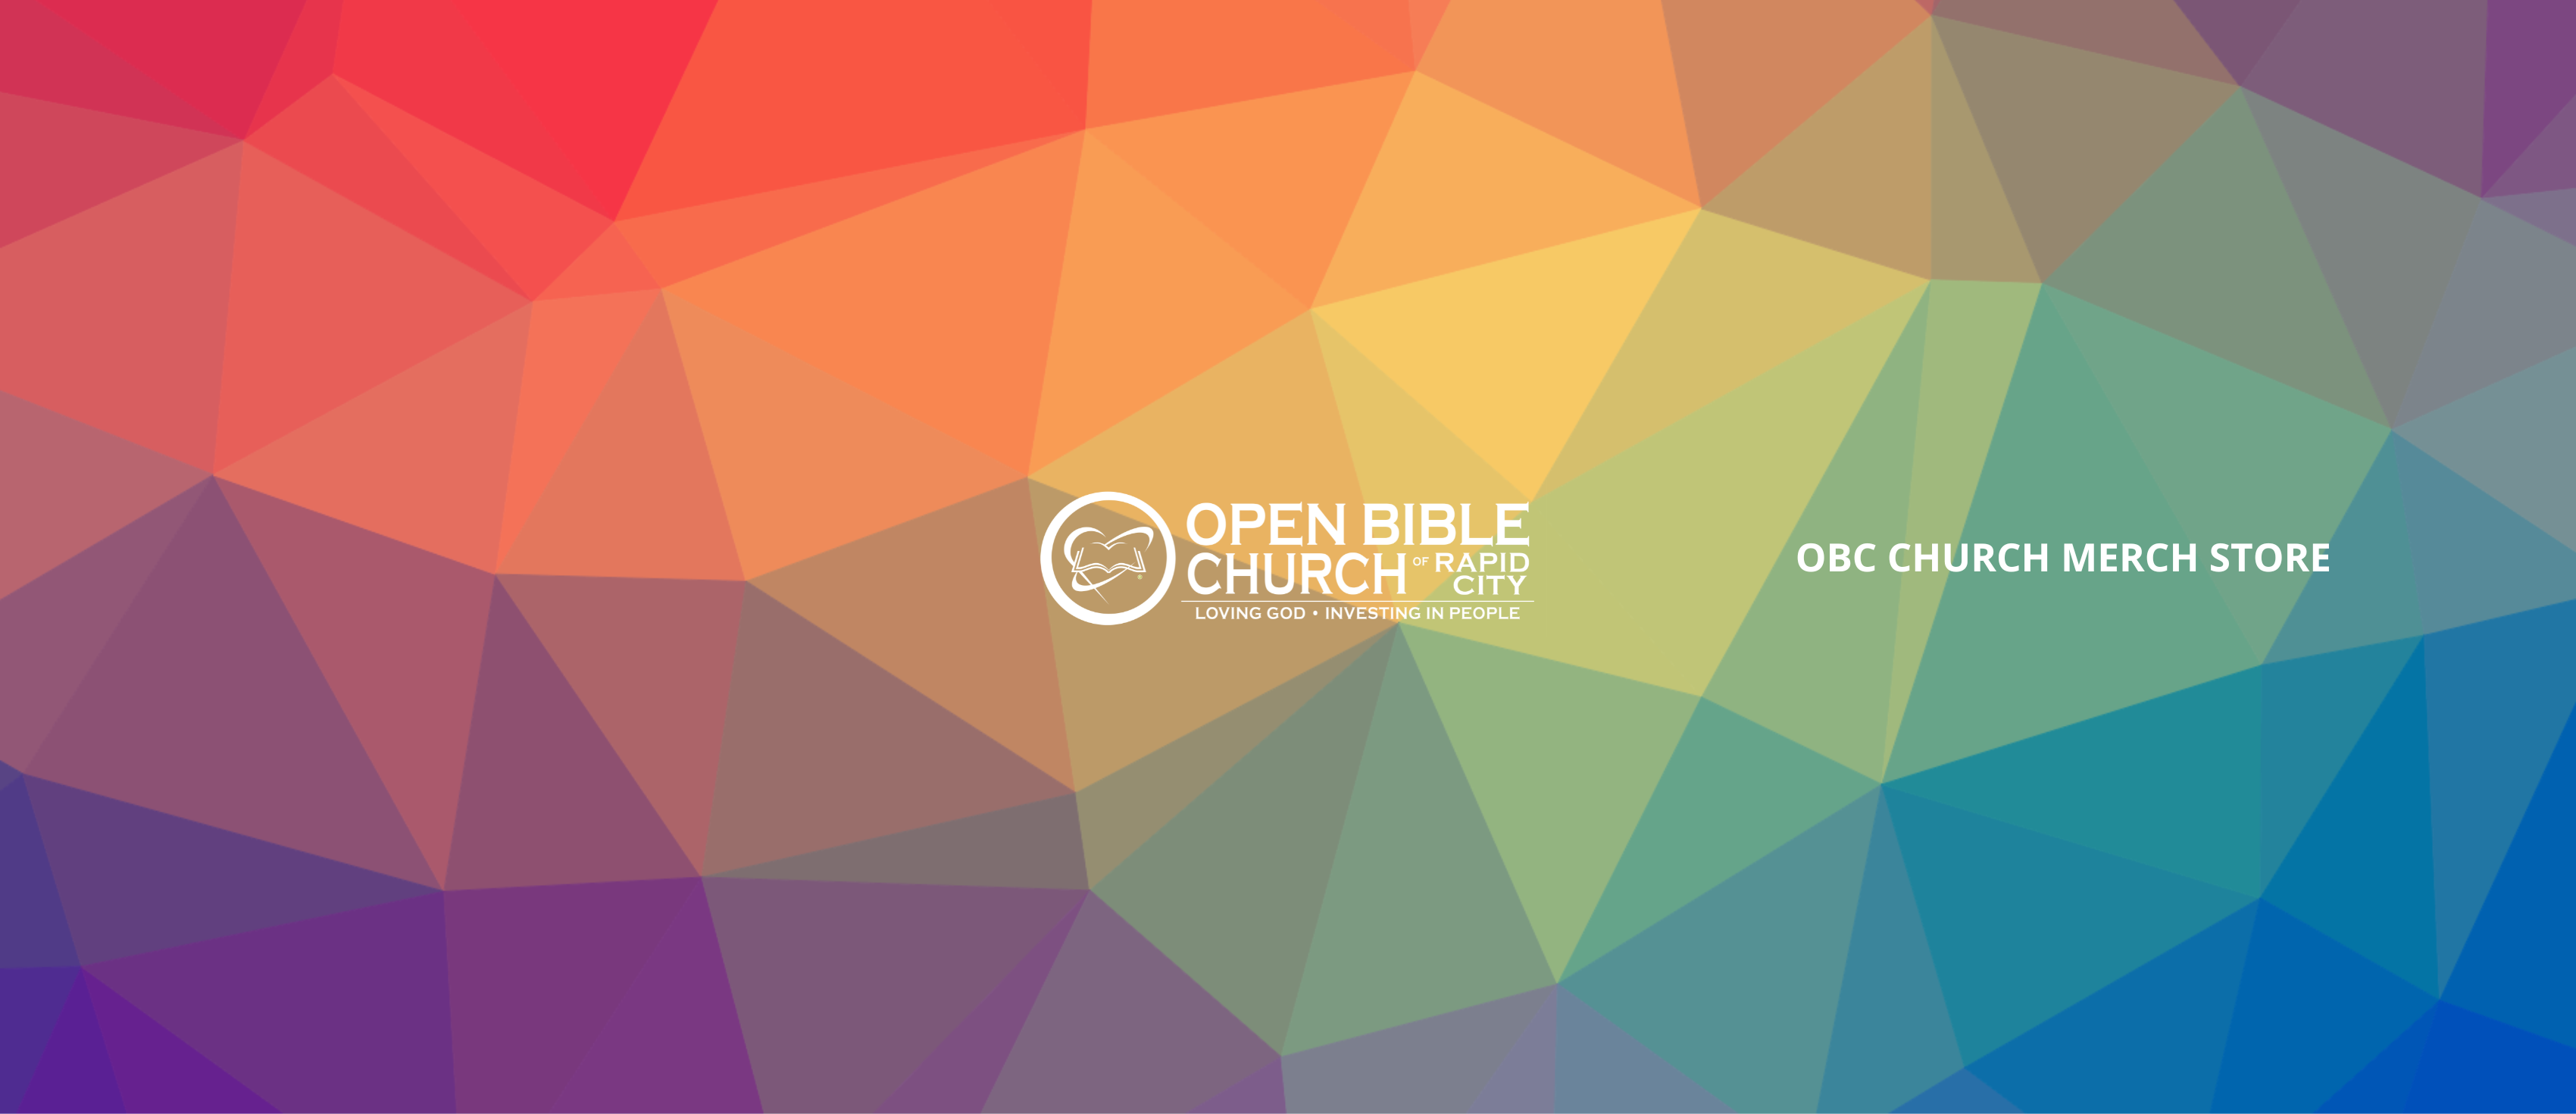 Open Bible Church of Rapid City